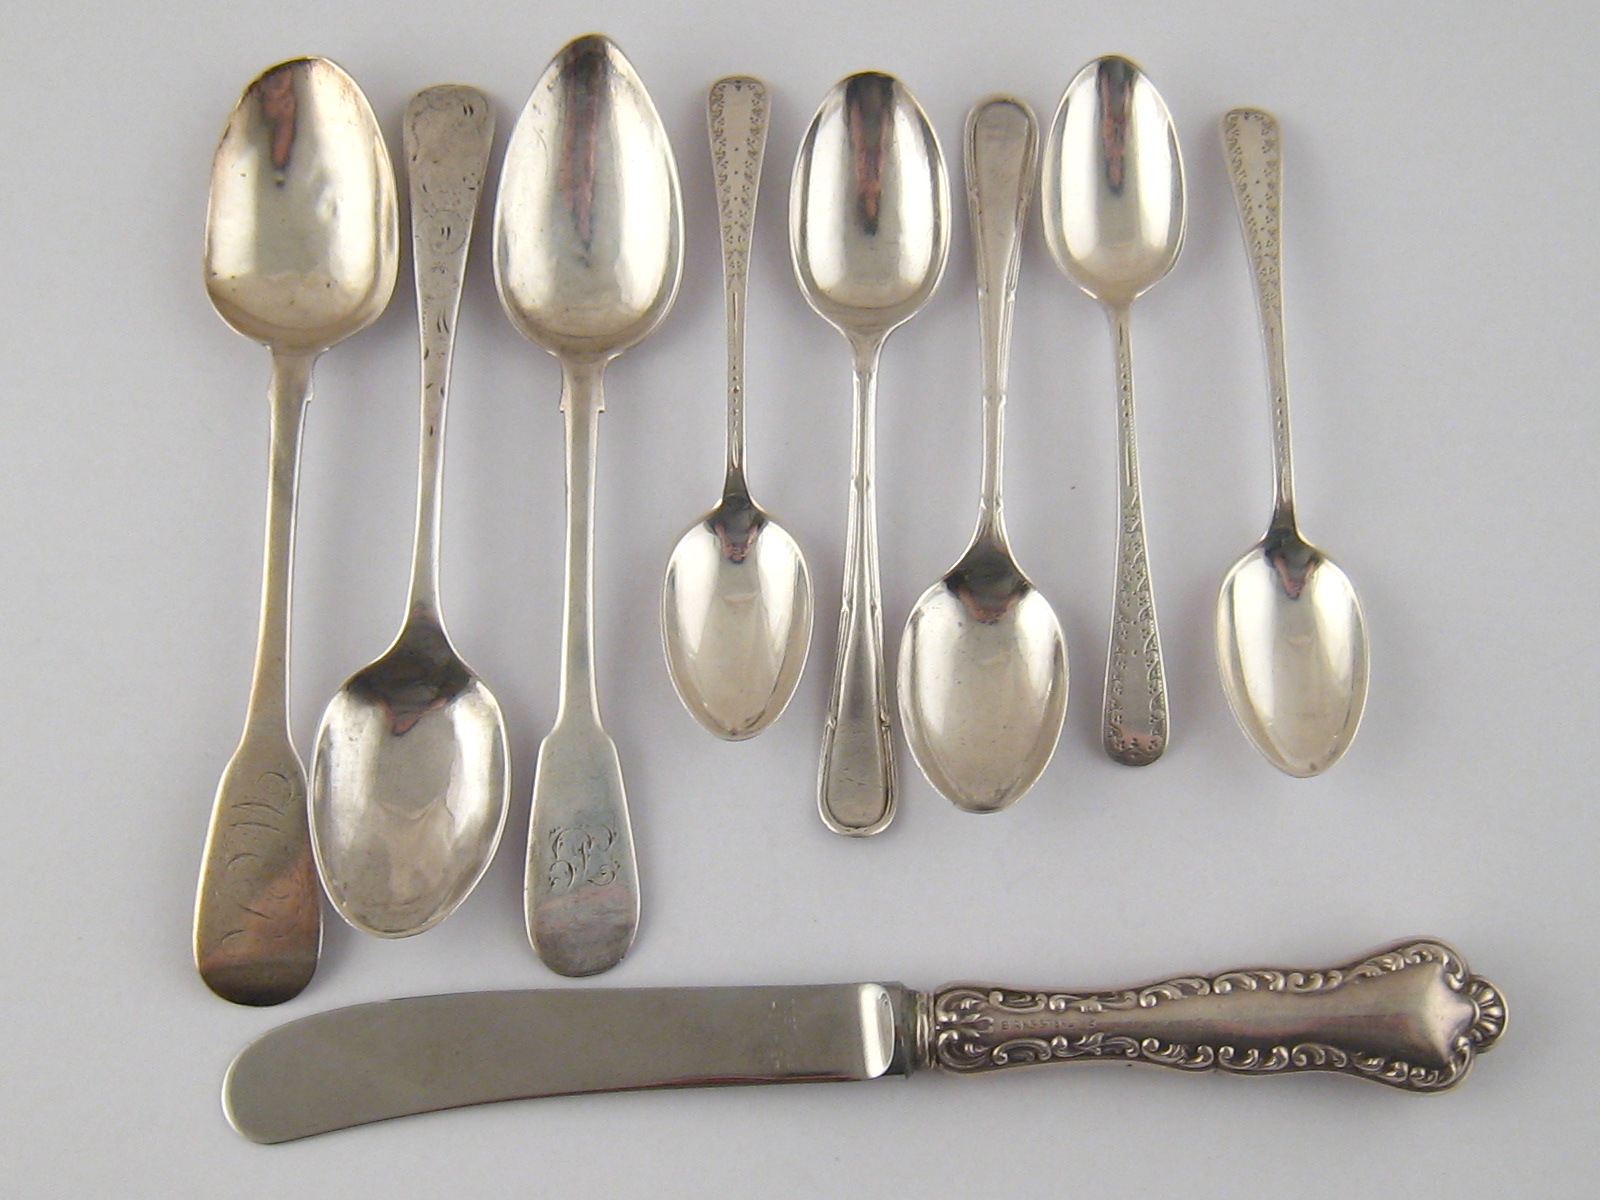 Two Georgian Irish silver fiddle pattern teaspoons, John Buckton, Dublin 1821 and 1828, and six